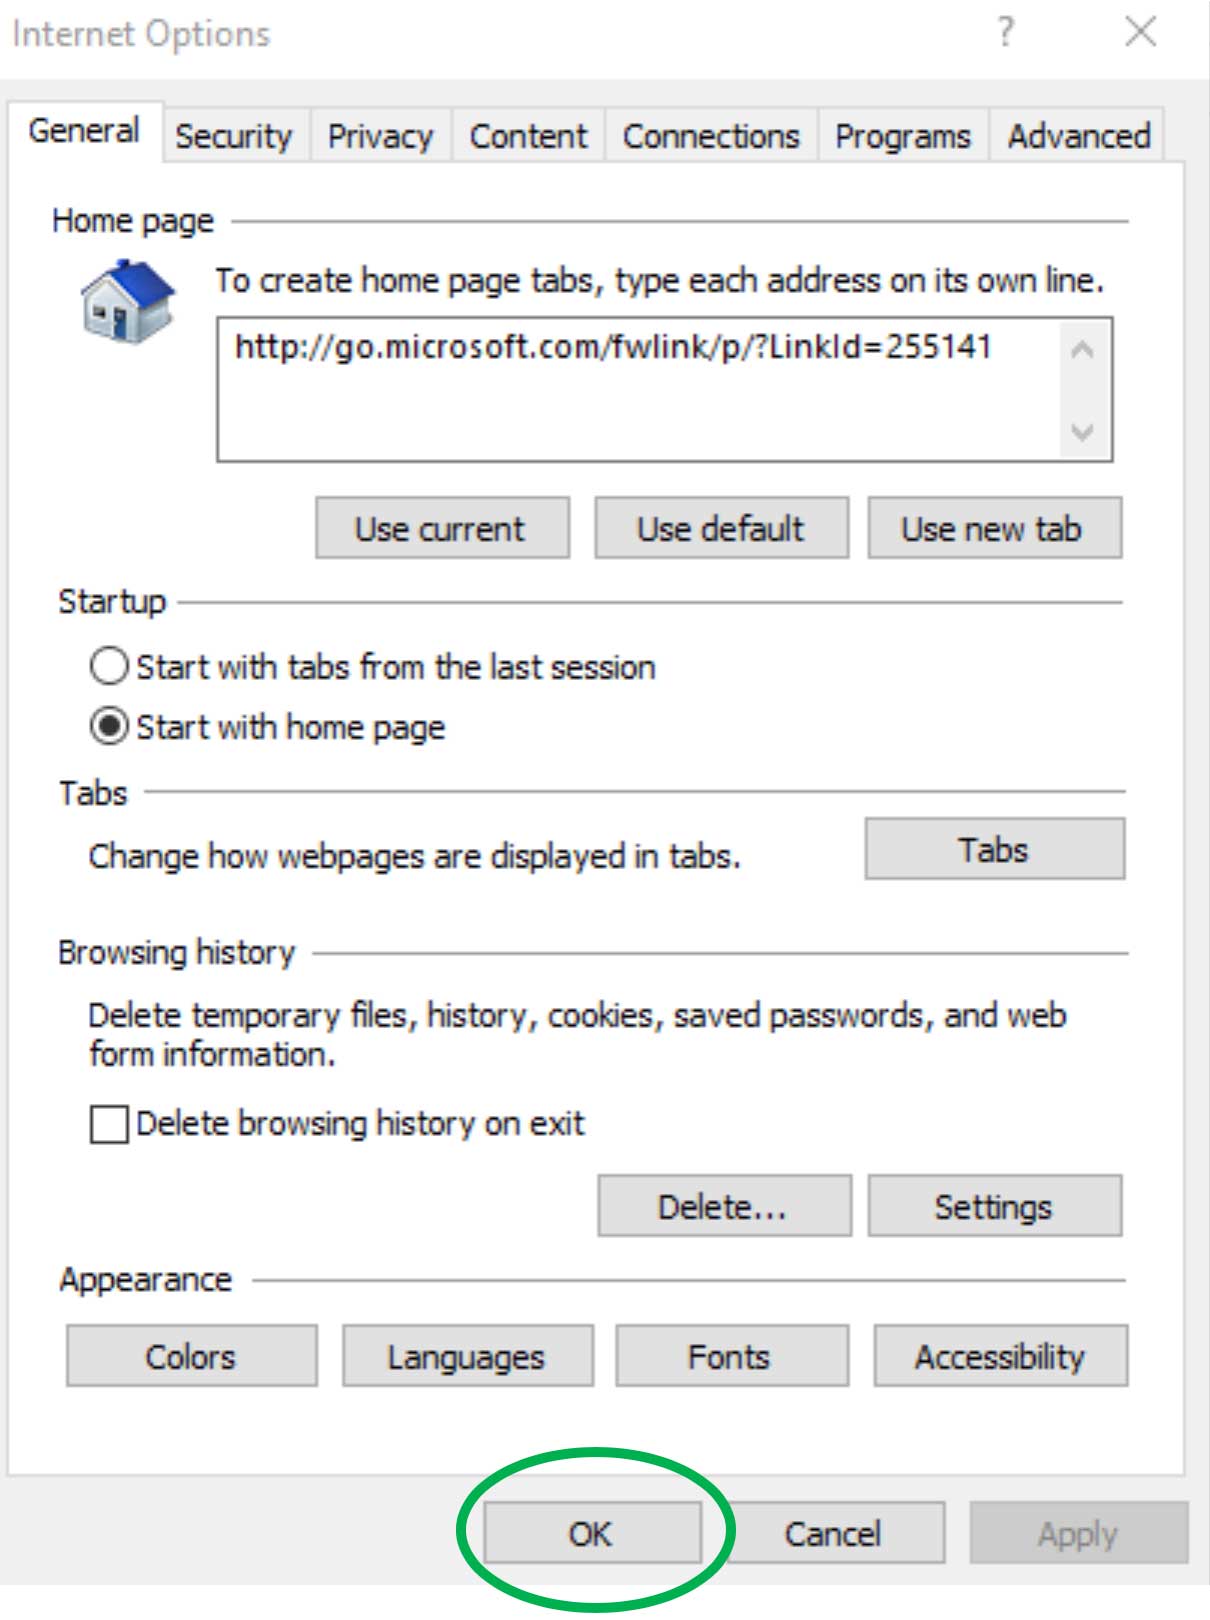 Internet Explorer Internet Options screen with OK button circled